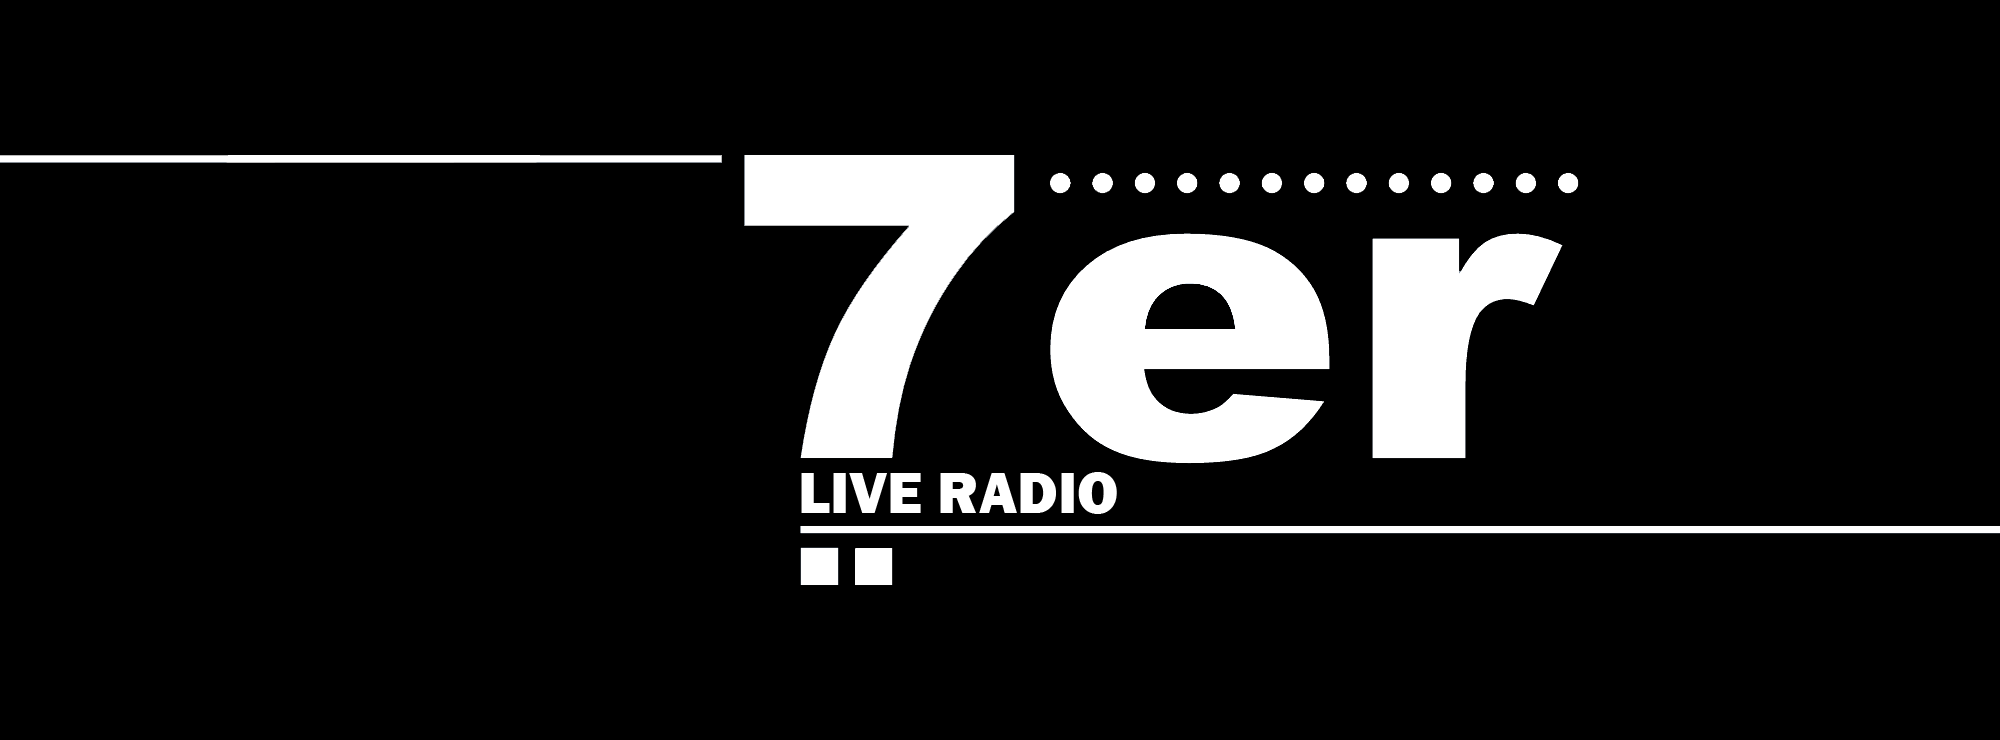 (c) 7er-radio.de